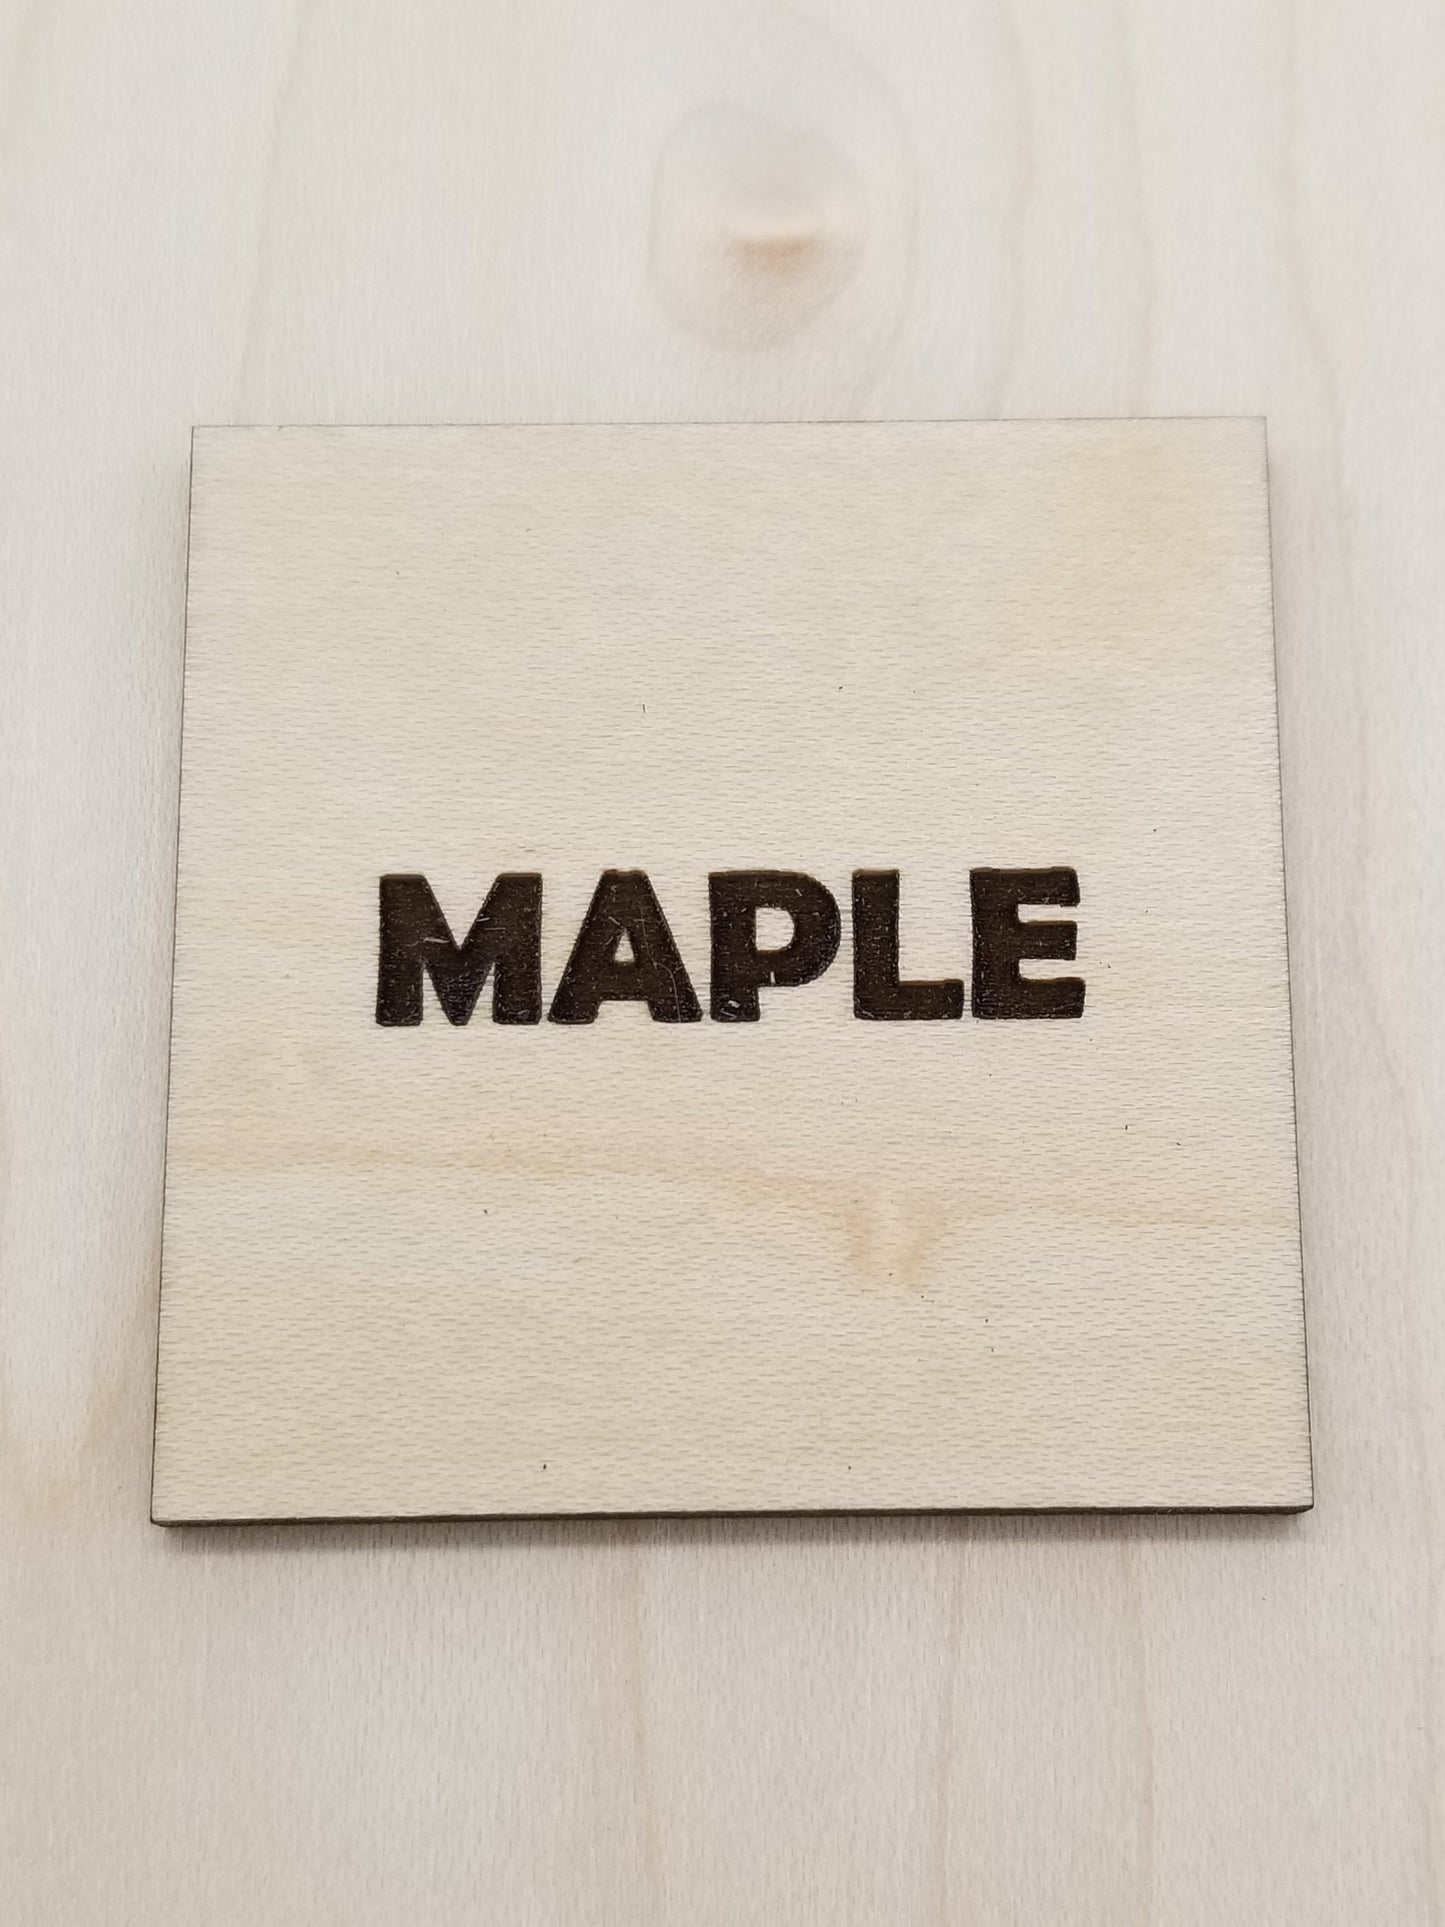 1/4 Maple Plywood